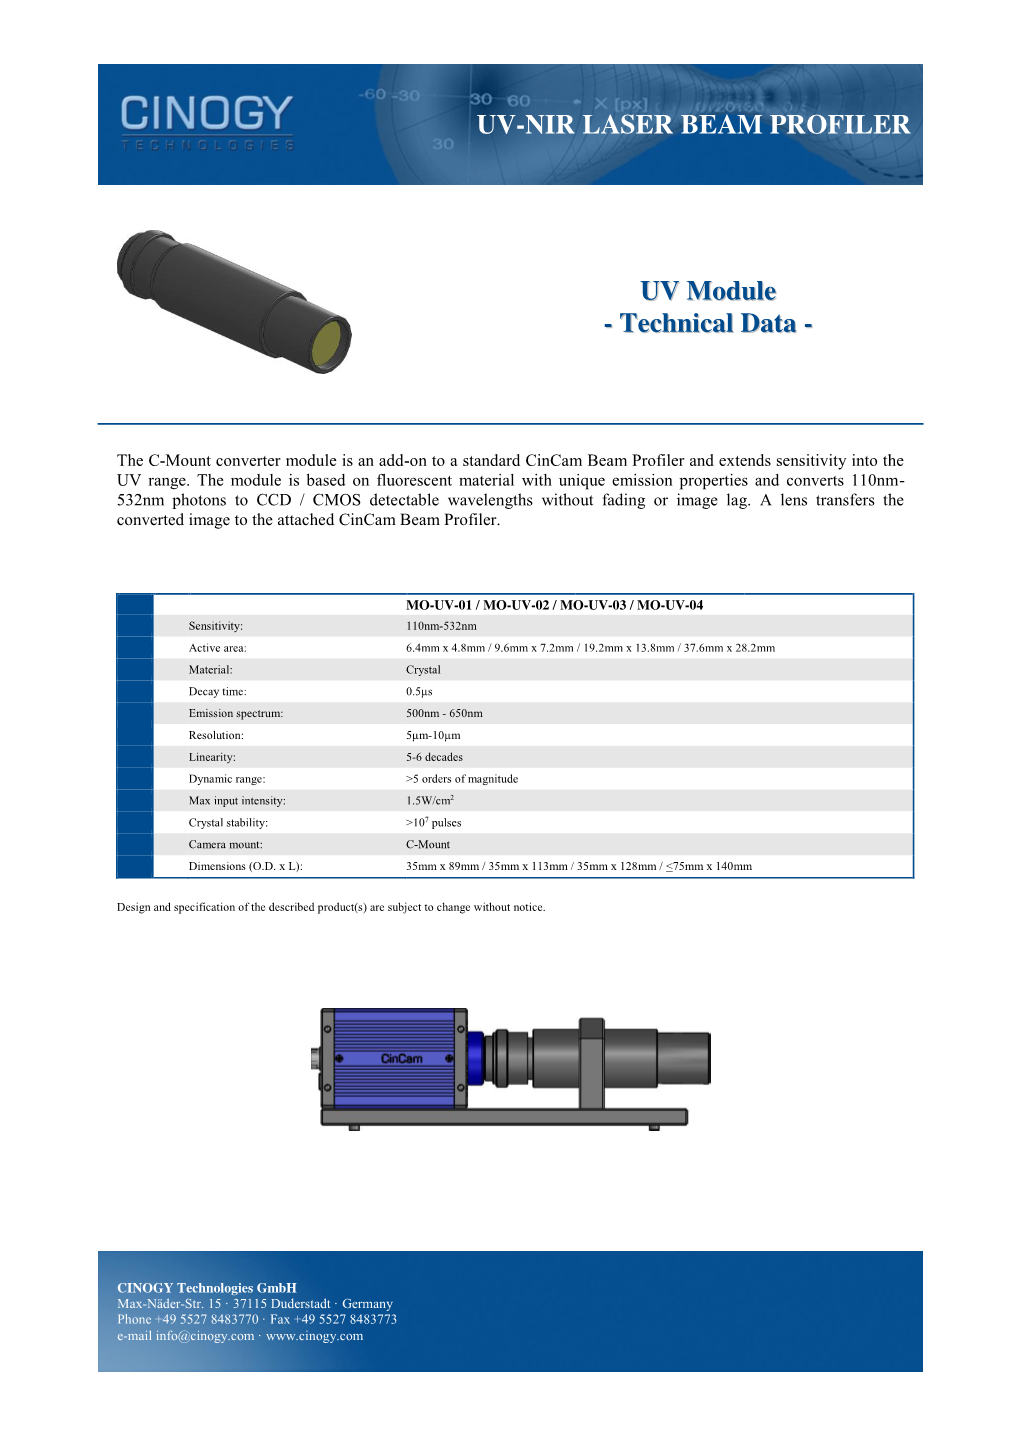 UV Module - Technical Data